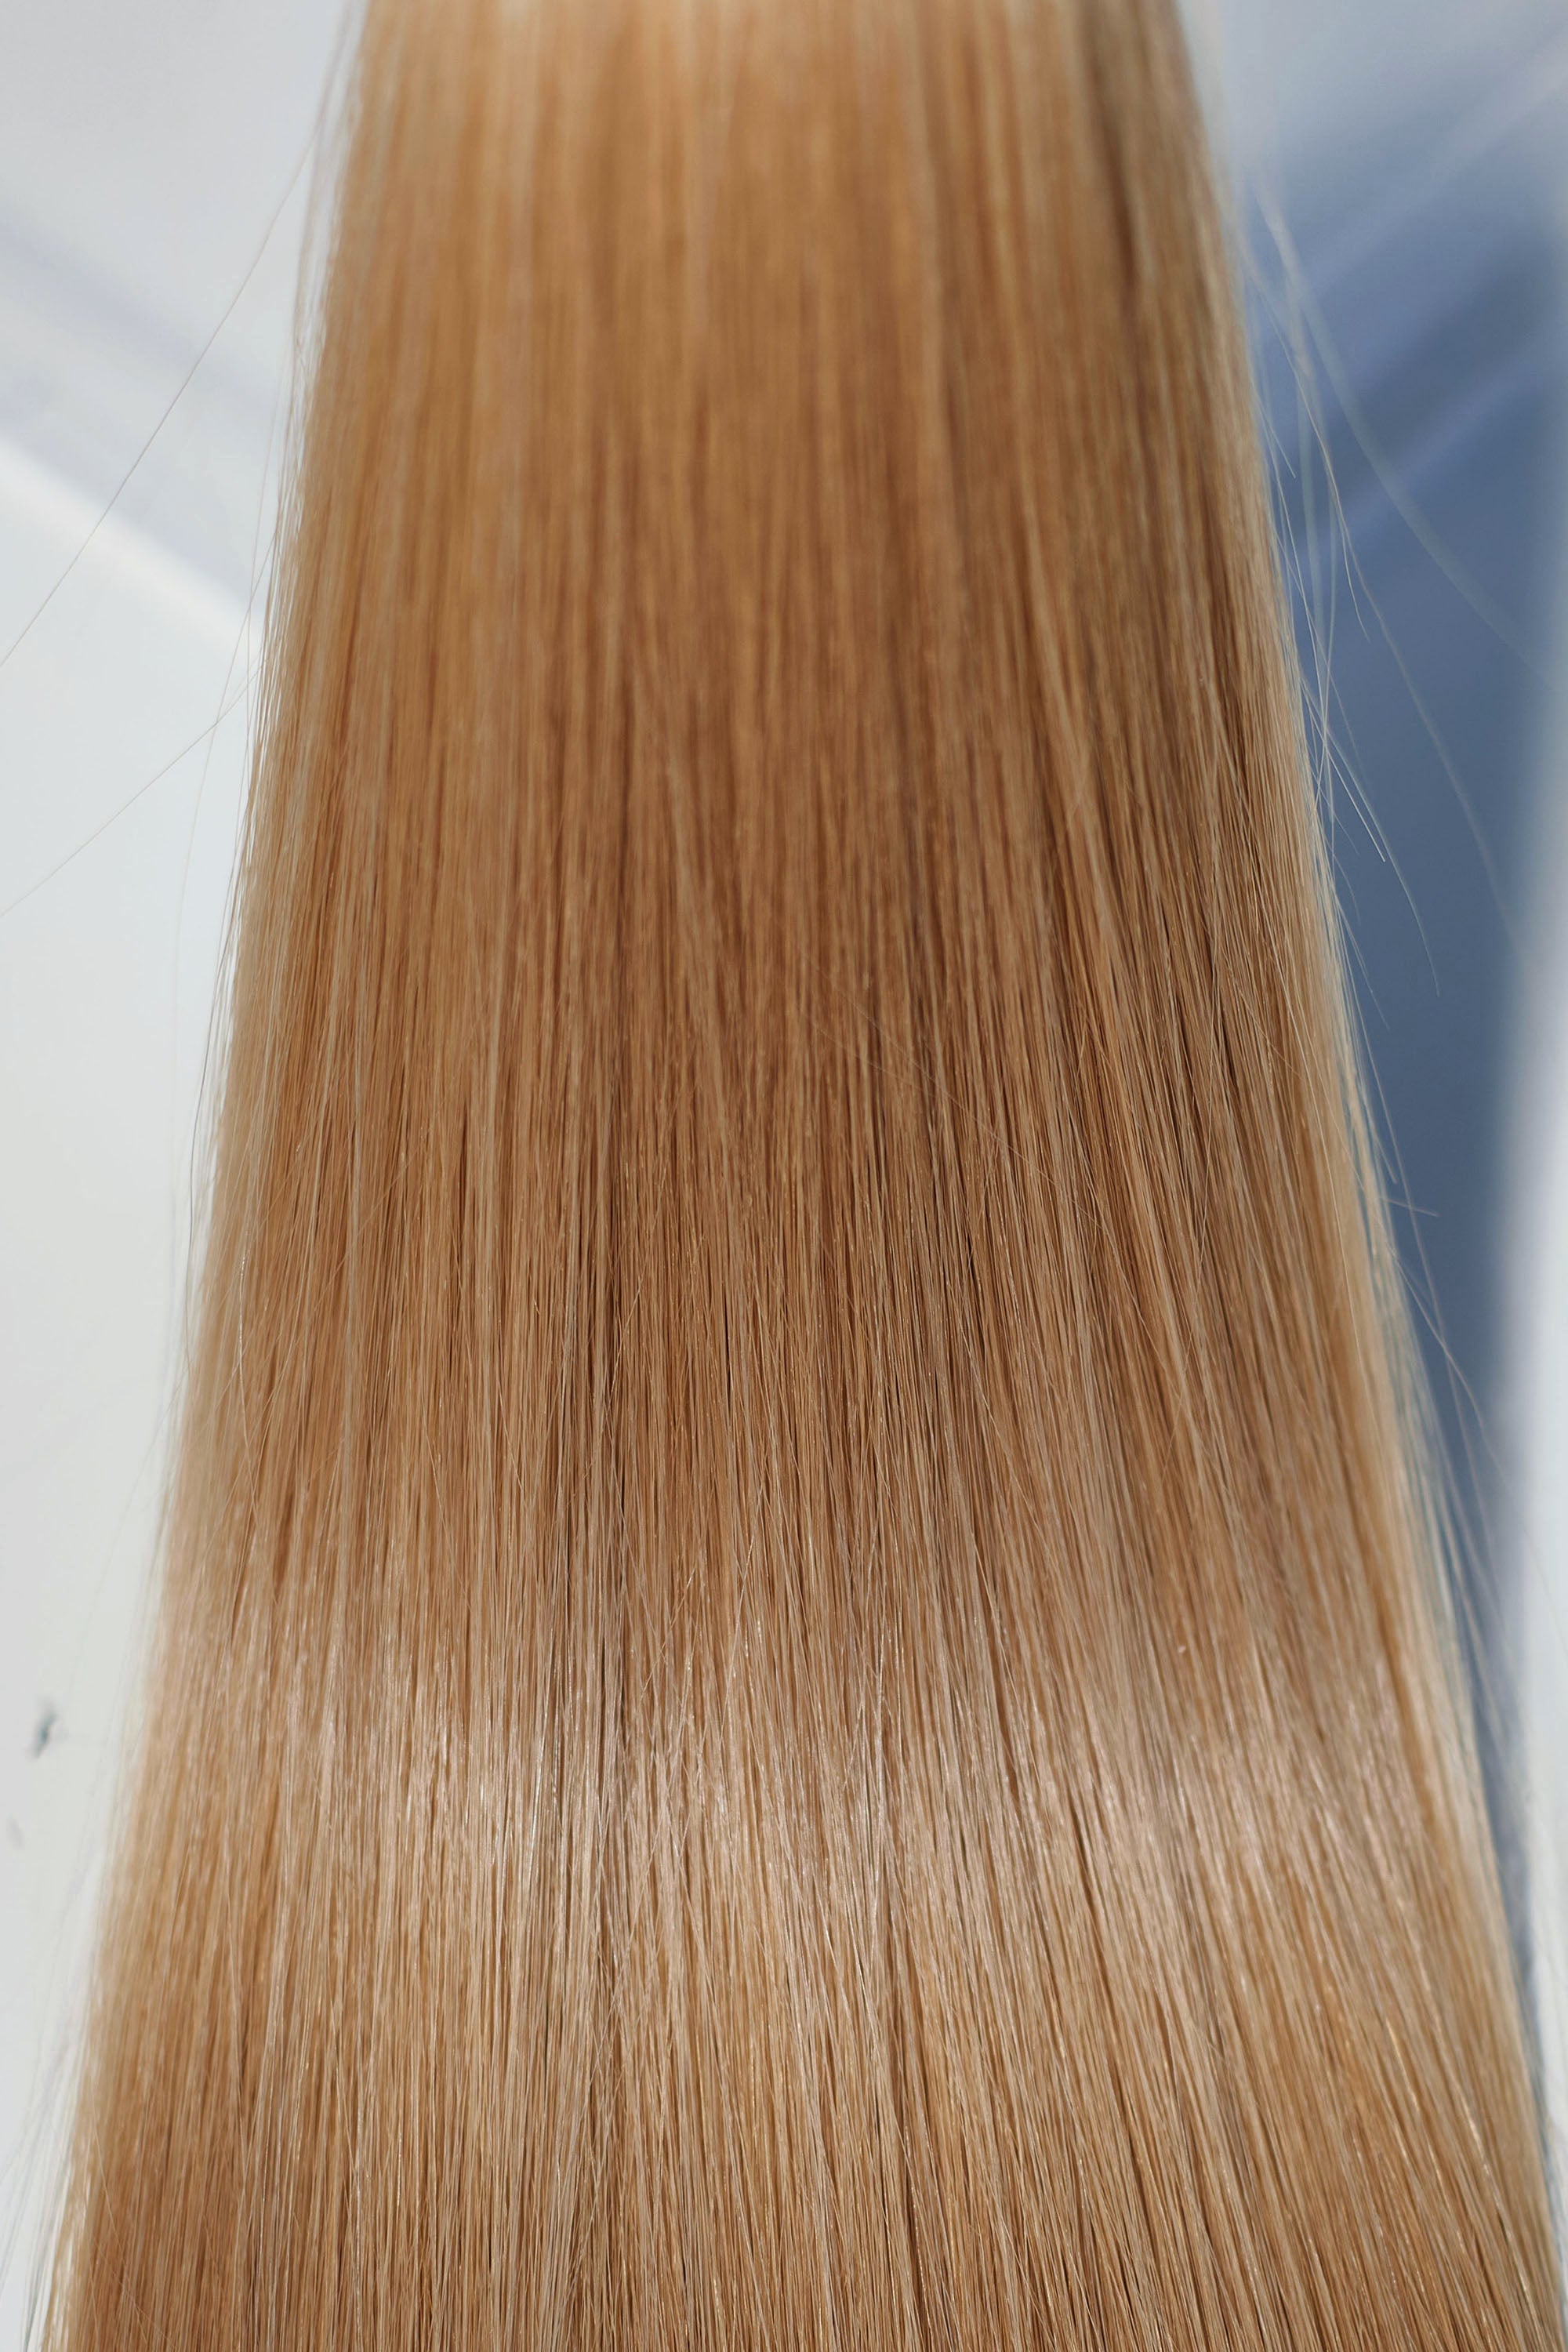 Behair professional Keratin Tip "Premium" 22" (55cm) Natural Straight Gold Sand #18 - 25g (Micro - 0.5g each pcs) hair extensions